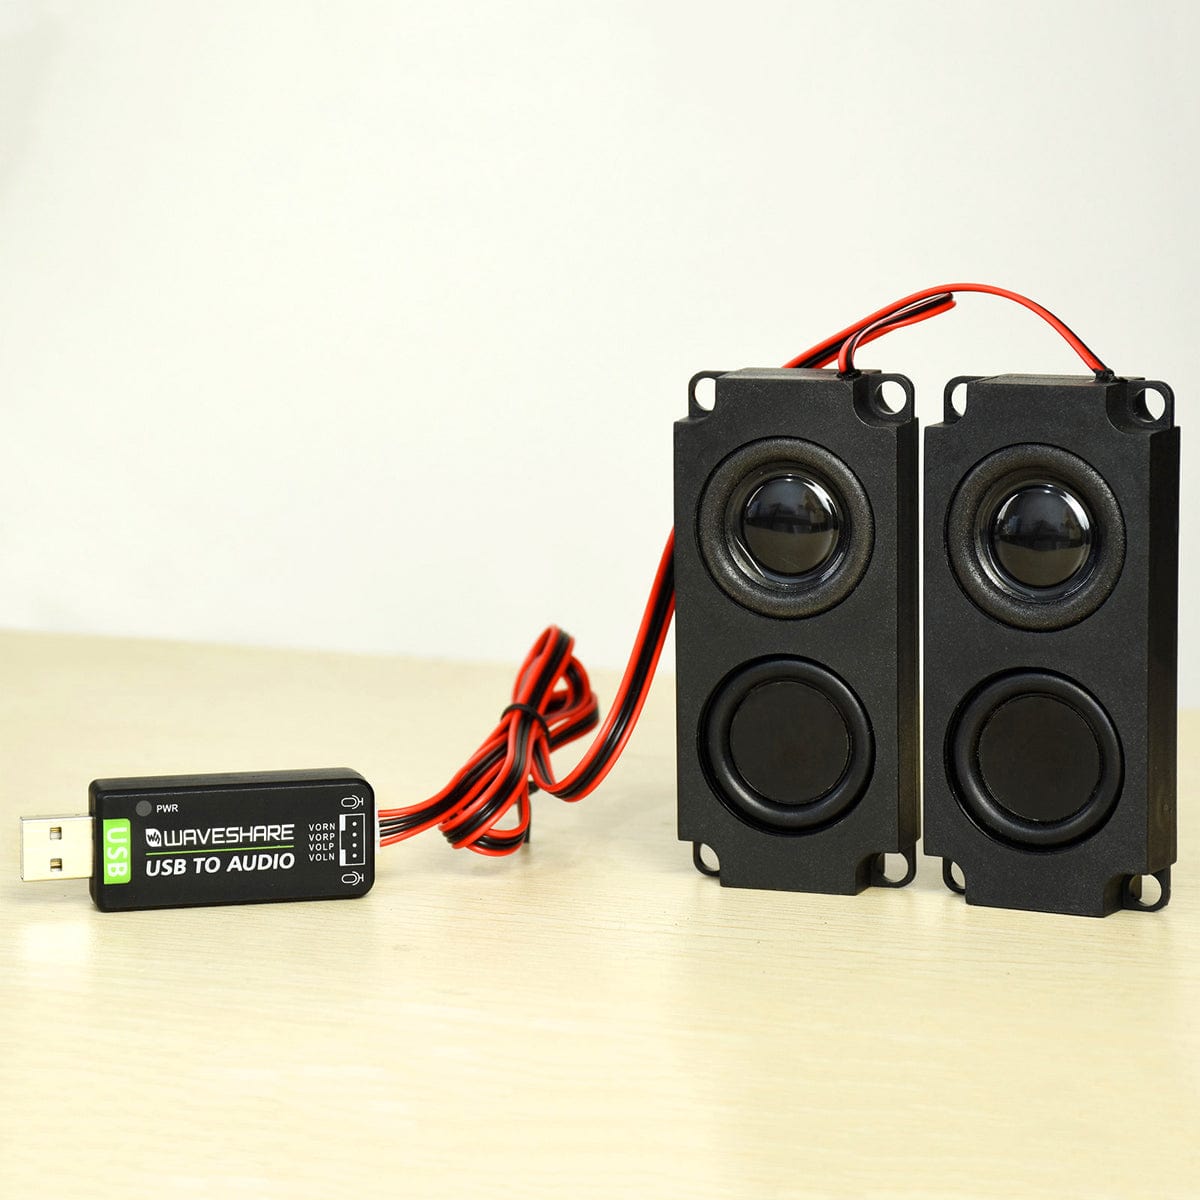 USB Sound card for Raspberry Pi (Driver-free) - The Pi Hut